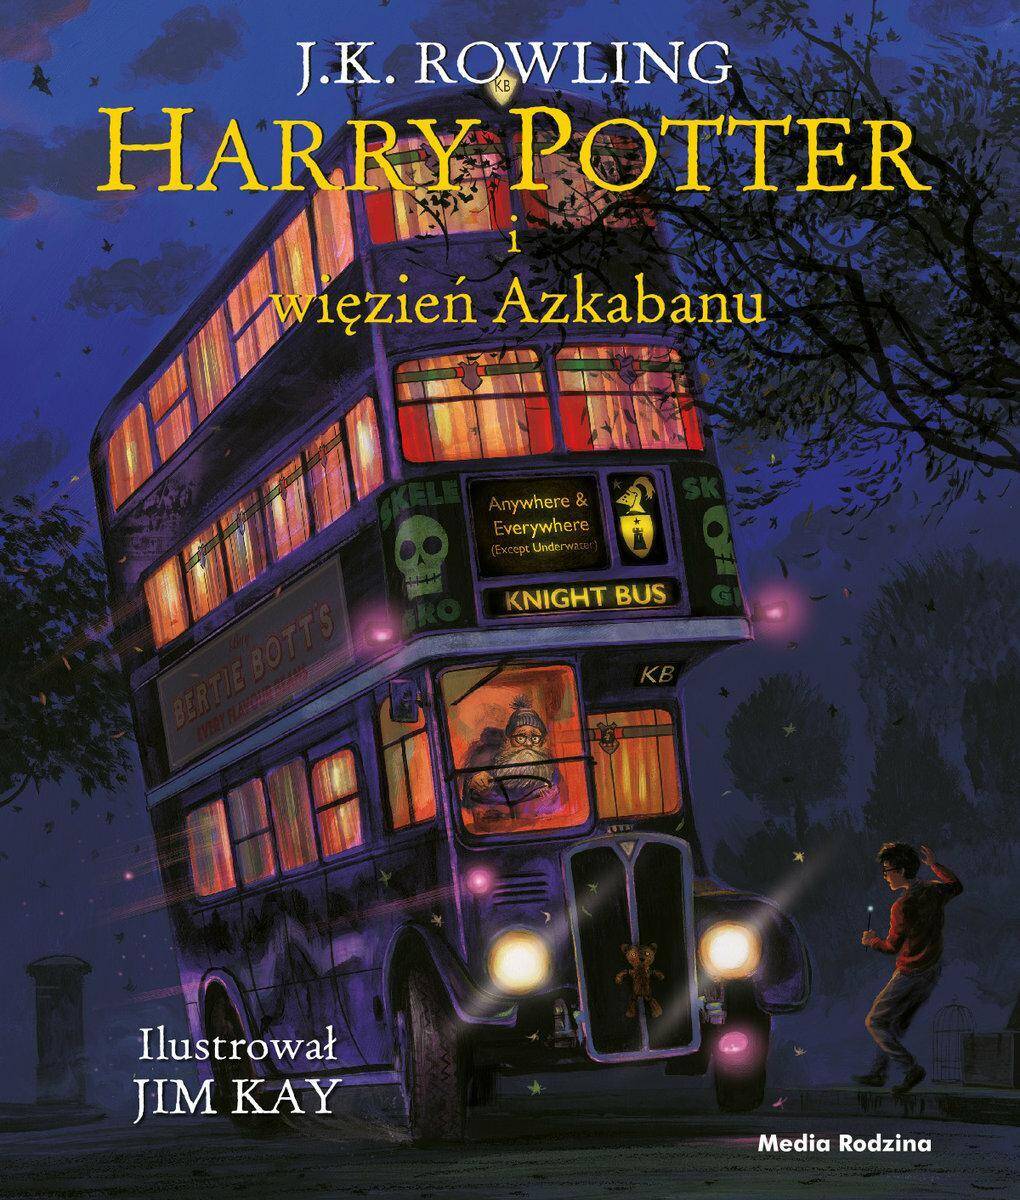 Harry Potter i więzień Azkabanu ilustrow